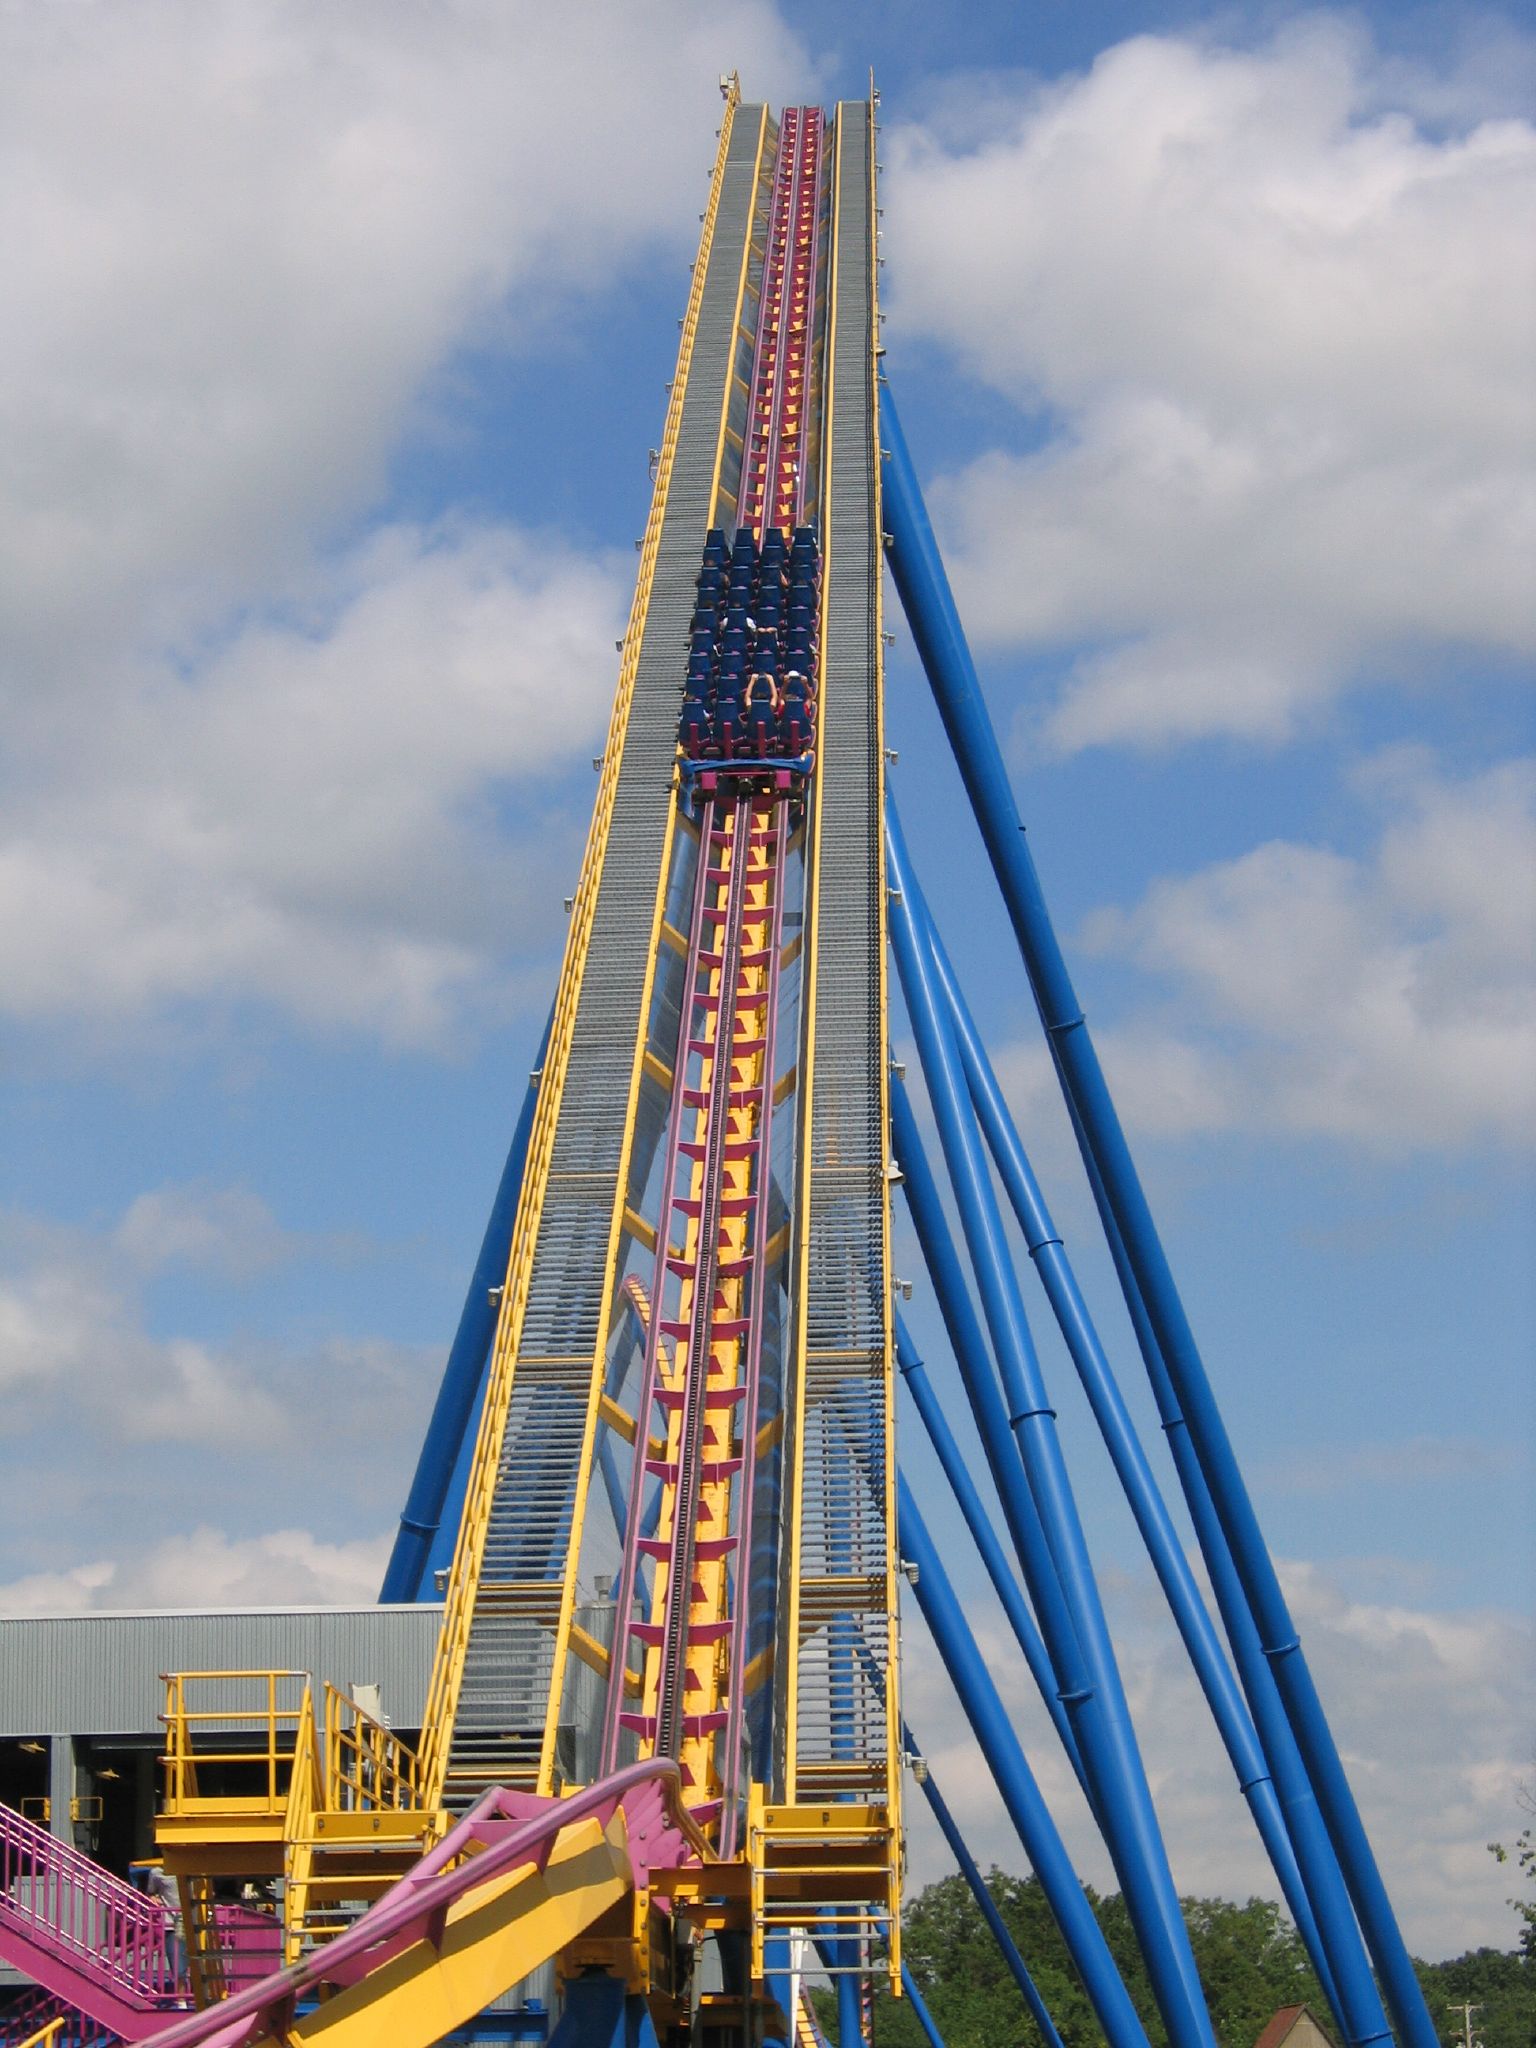 RollerCoaster Tycoon 3 - Wikipedia